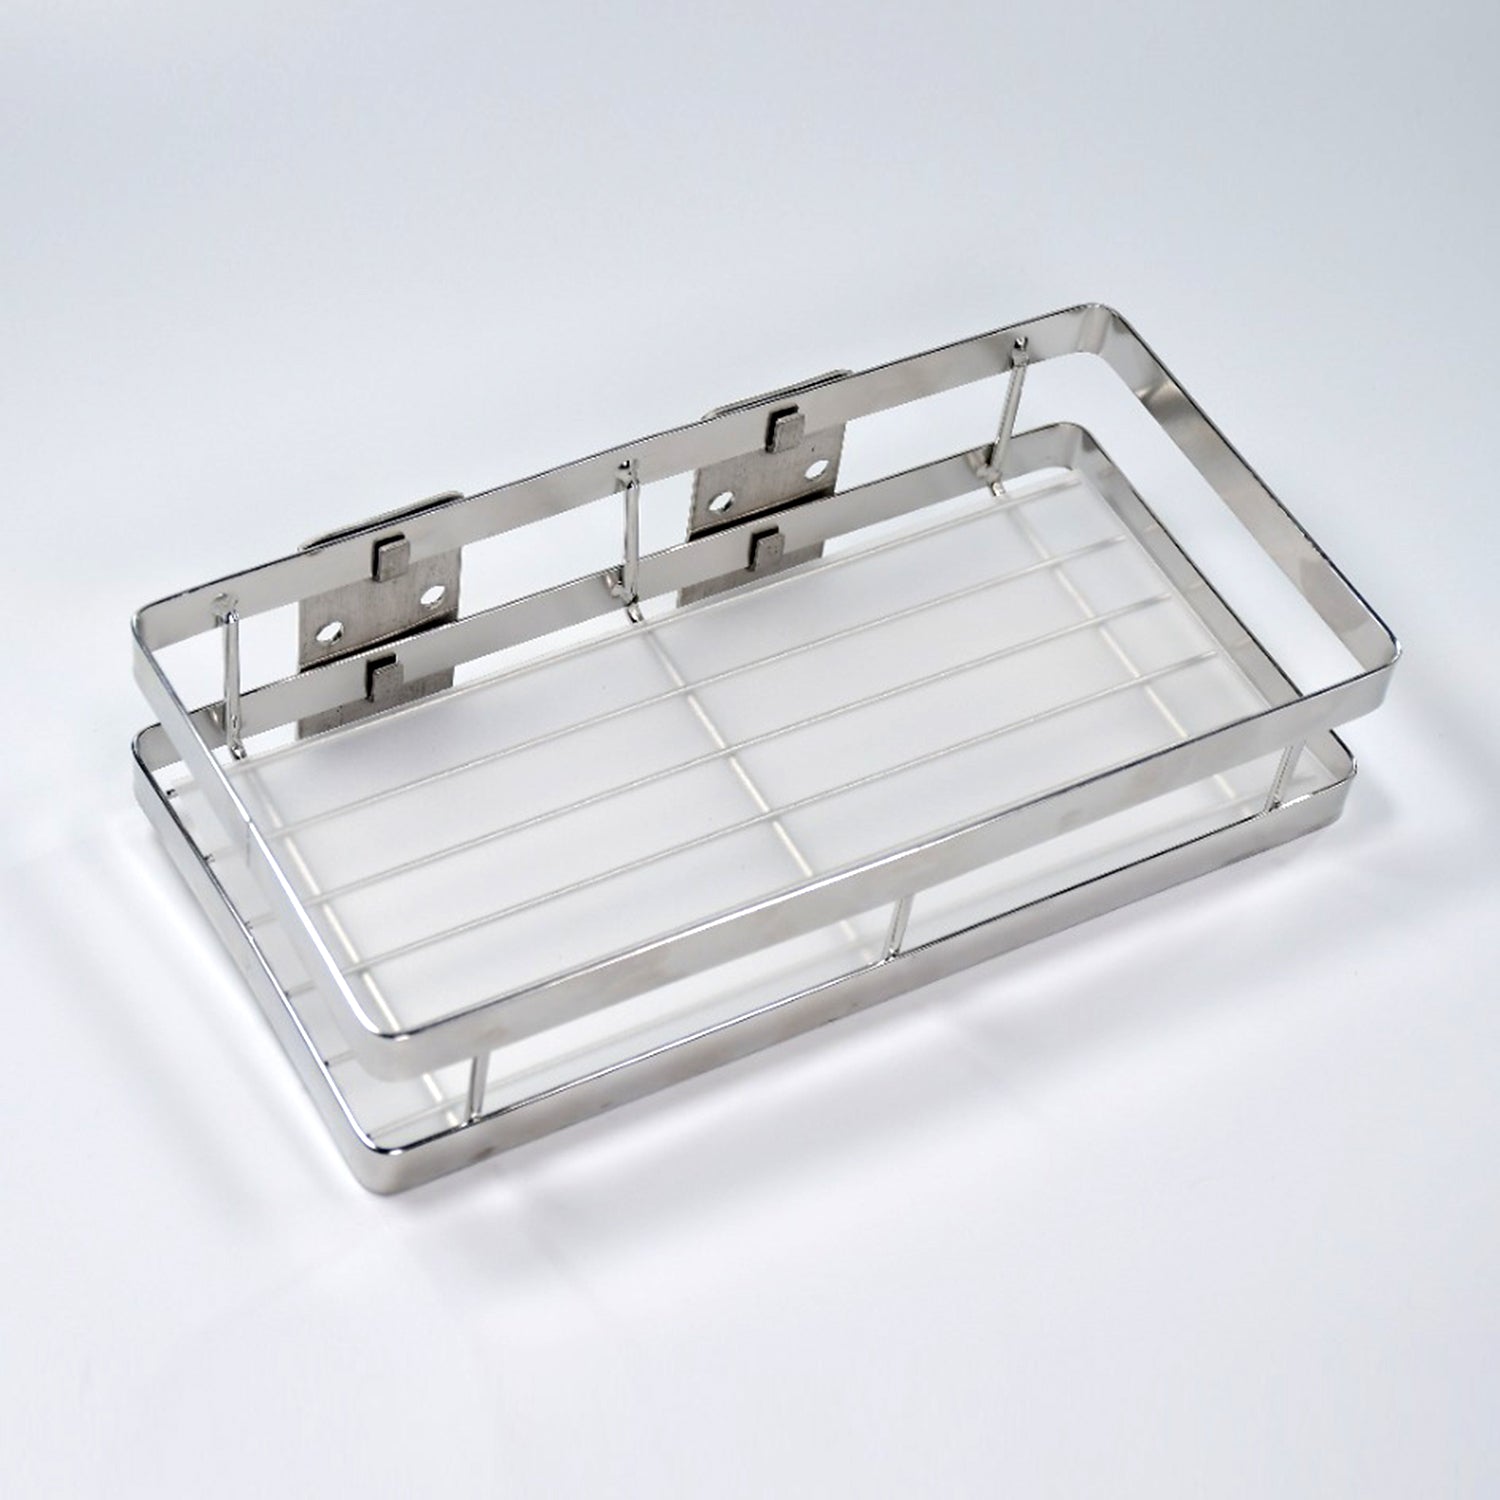 4922 25cm Metal Space Saving Multi-Purpose rack for Kitchen Storage Organizer Shelf Stand. deodap